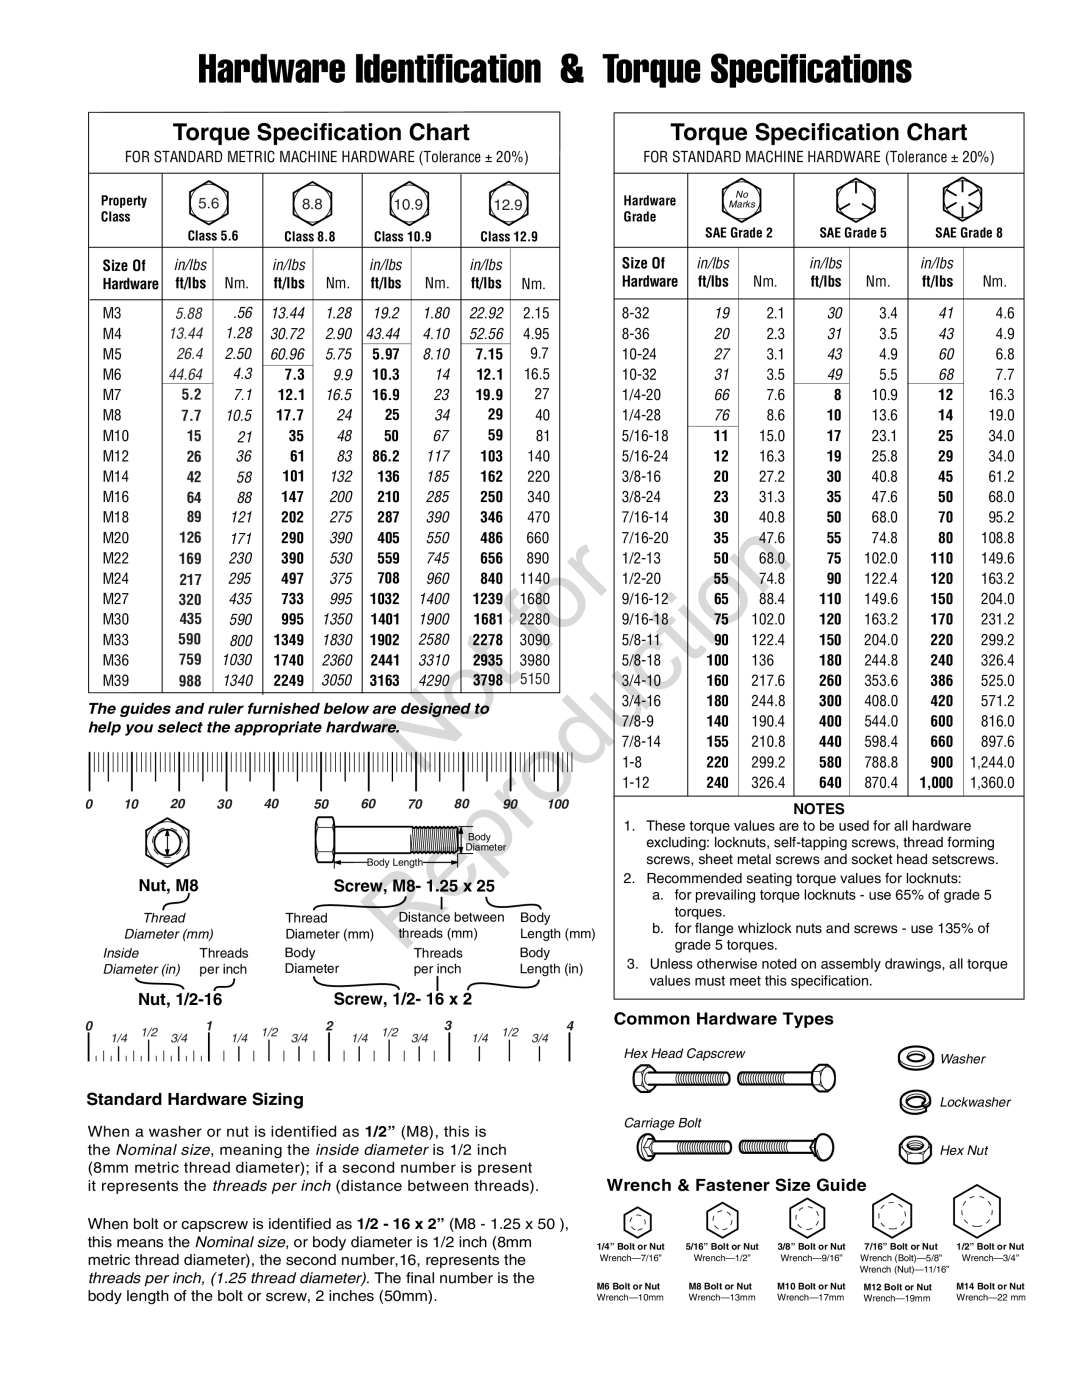 Briggs & Stratton 7800439 ction, Reprodu, Hardware Identification & Torque Specifications, Torque Specification Chart 